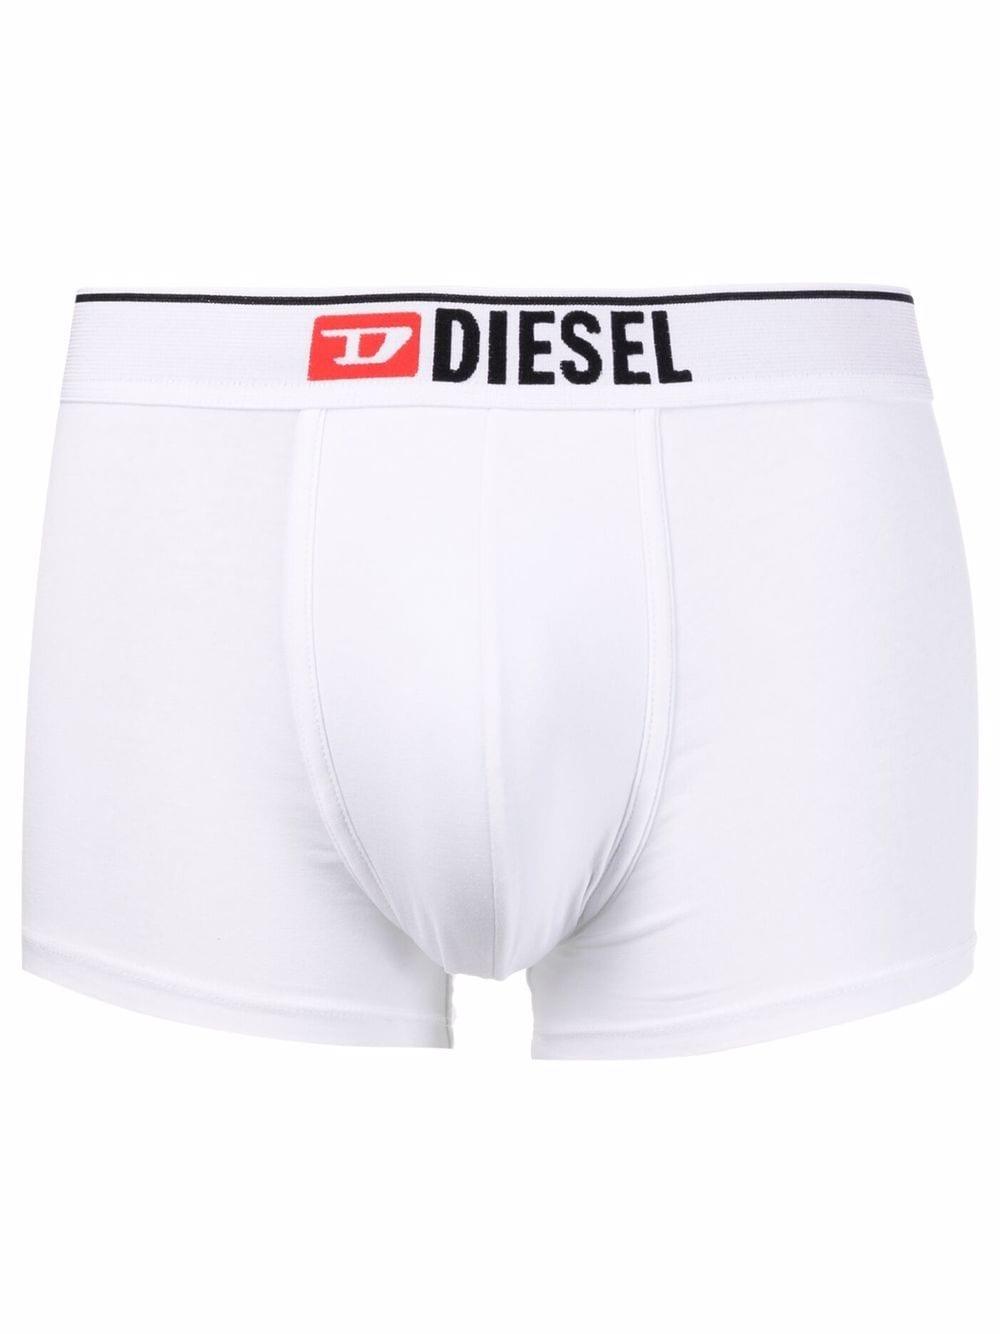 DIESEL Cotton Umbx-damien Boxers in White for Men | Lyst